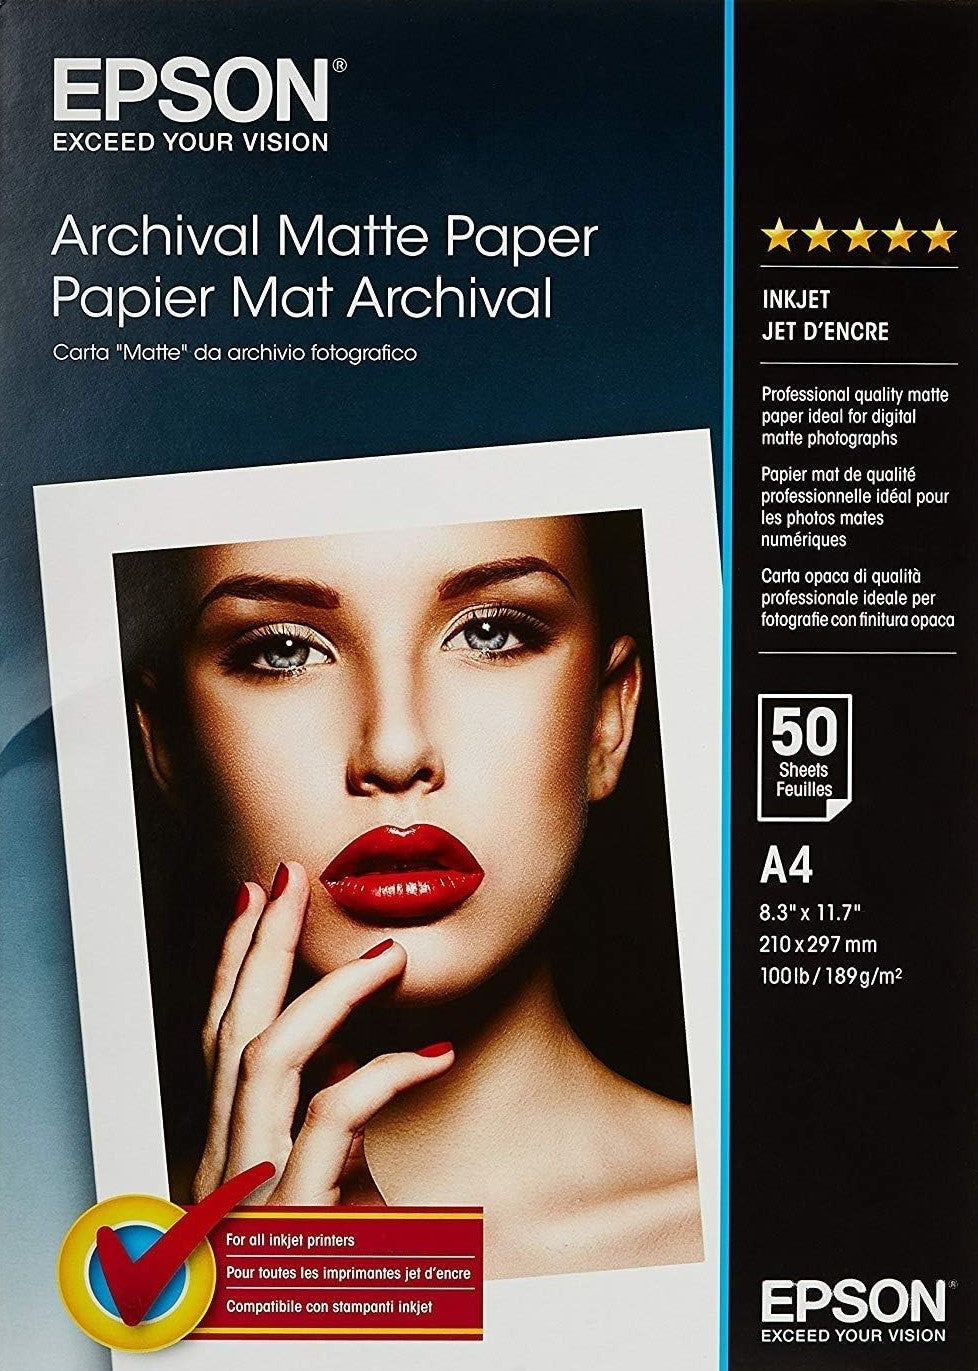 A4 189gsm Epson Archival Matte Paper 50 sheets